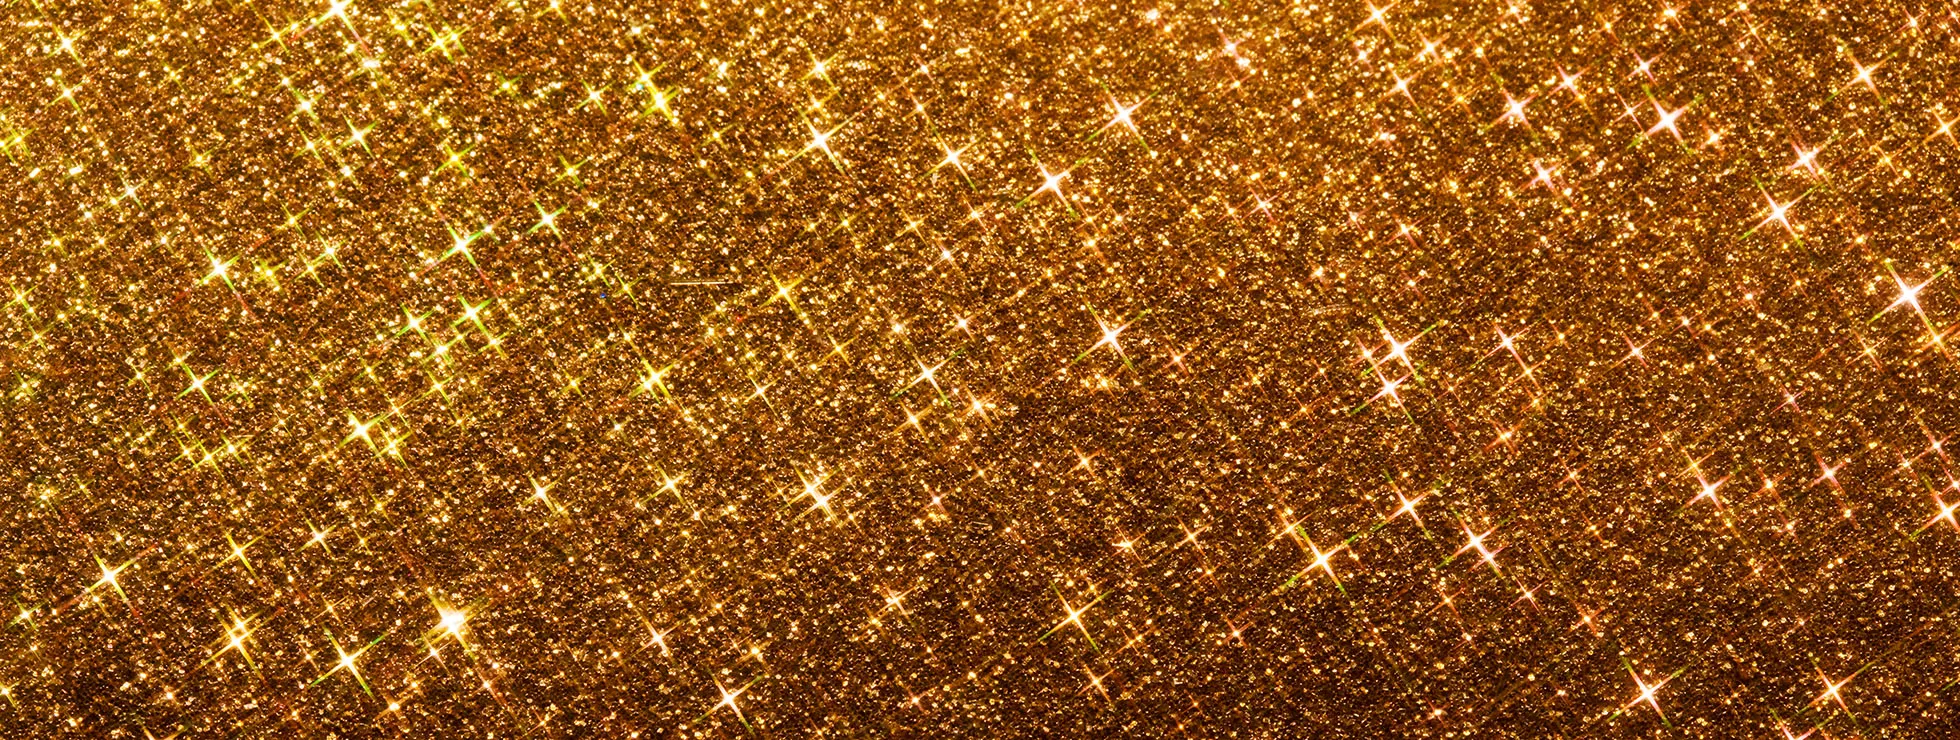 Banner showing sparkling gold glitter